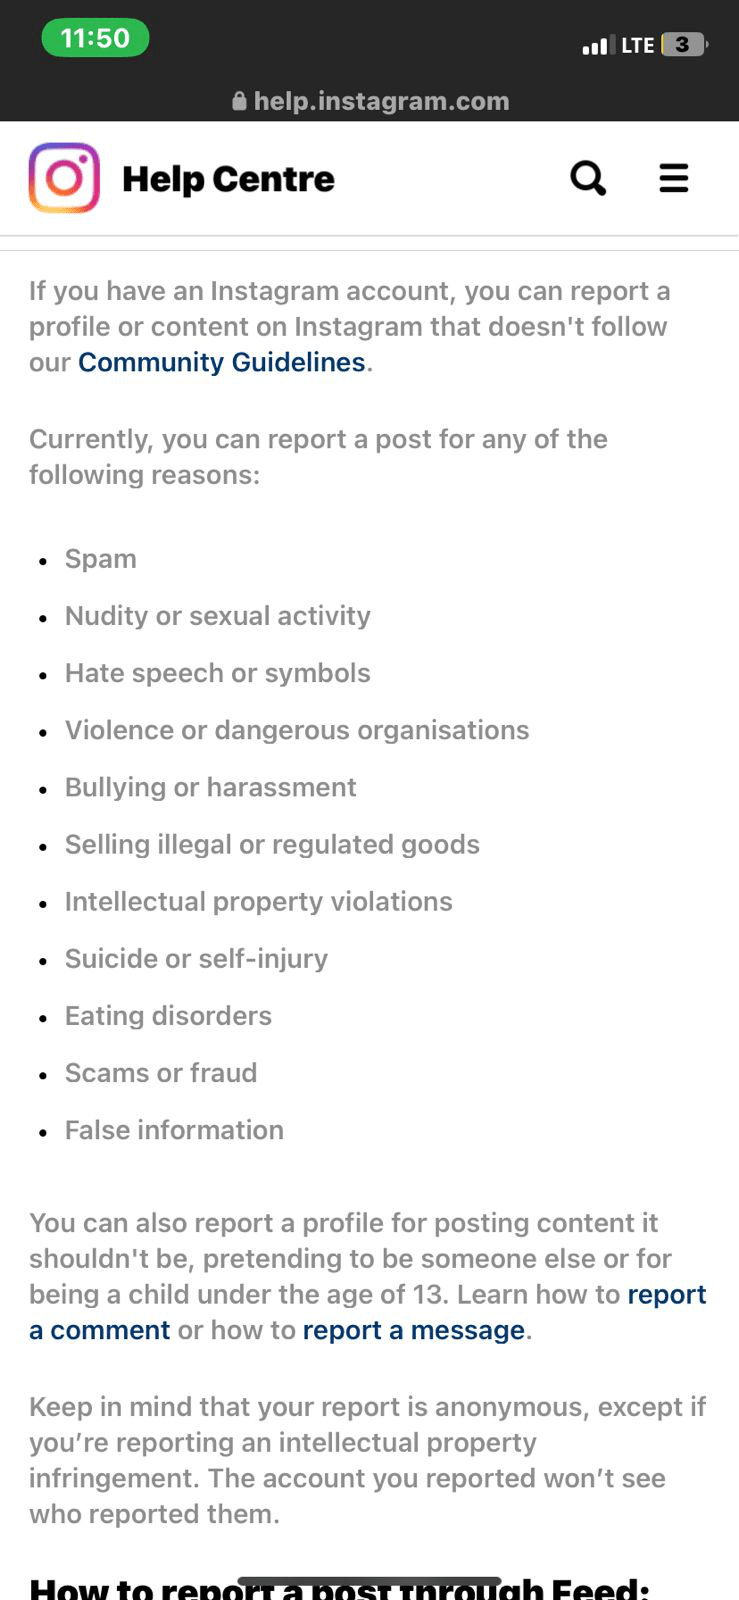 Follow Instagram's community guidelines